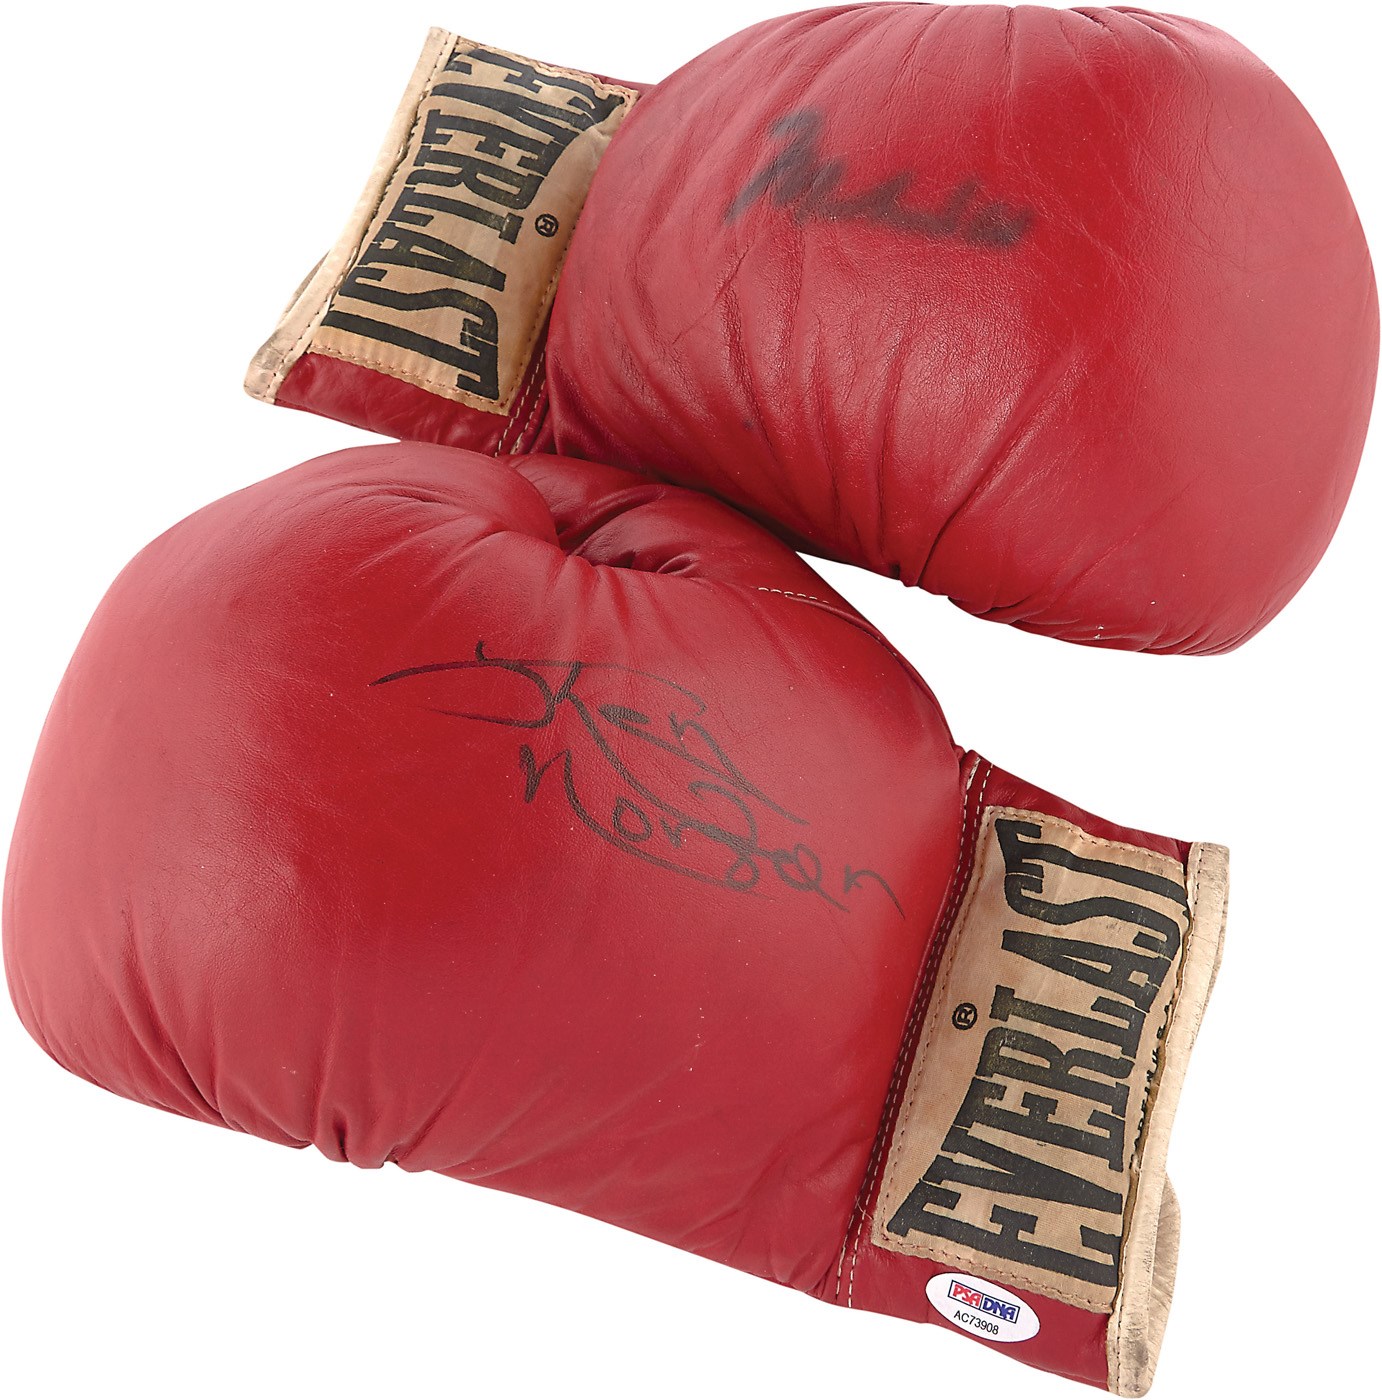 Muhammad Ali & Boxing - Ken Norton 1976 Fight Worn Gloves from Norton vs. Ali III at Yankee Stadium - Signed by Norton & Ali (Photo-Matched)